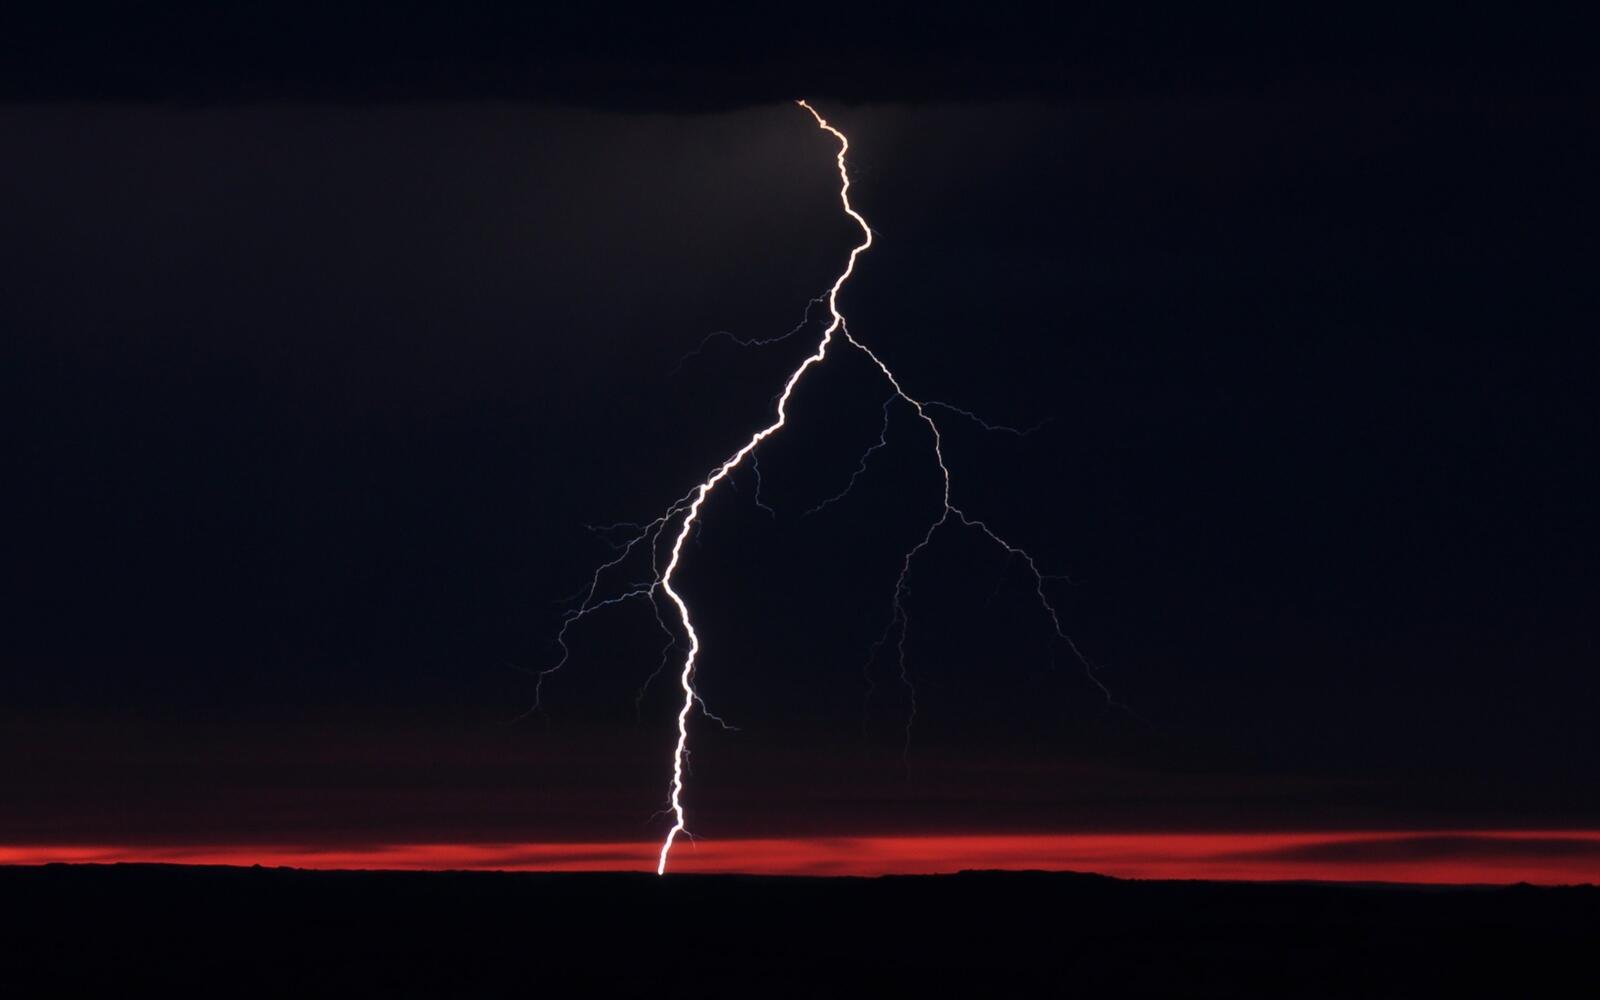 Free photo Lightning in the night sky strikes the ground